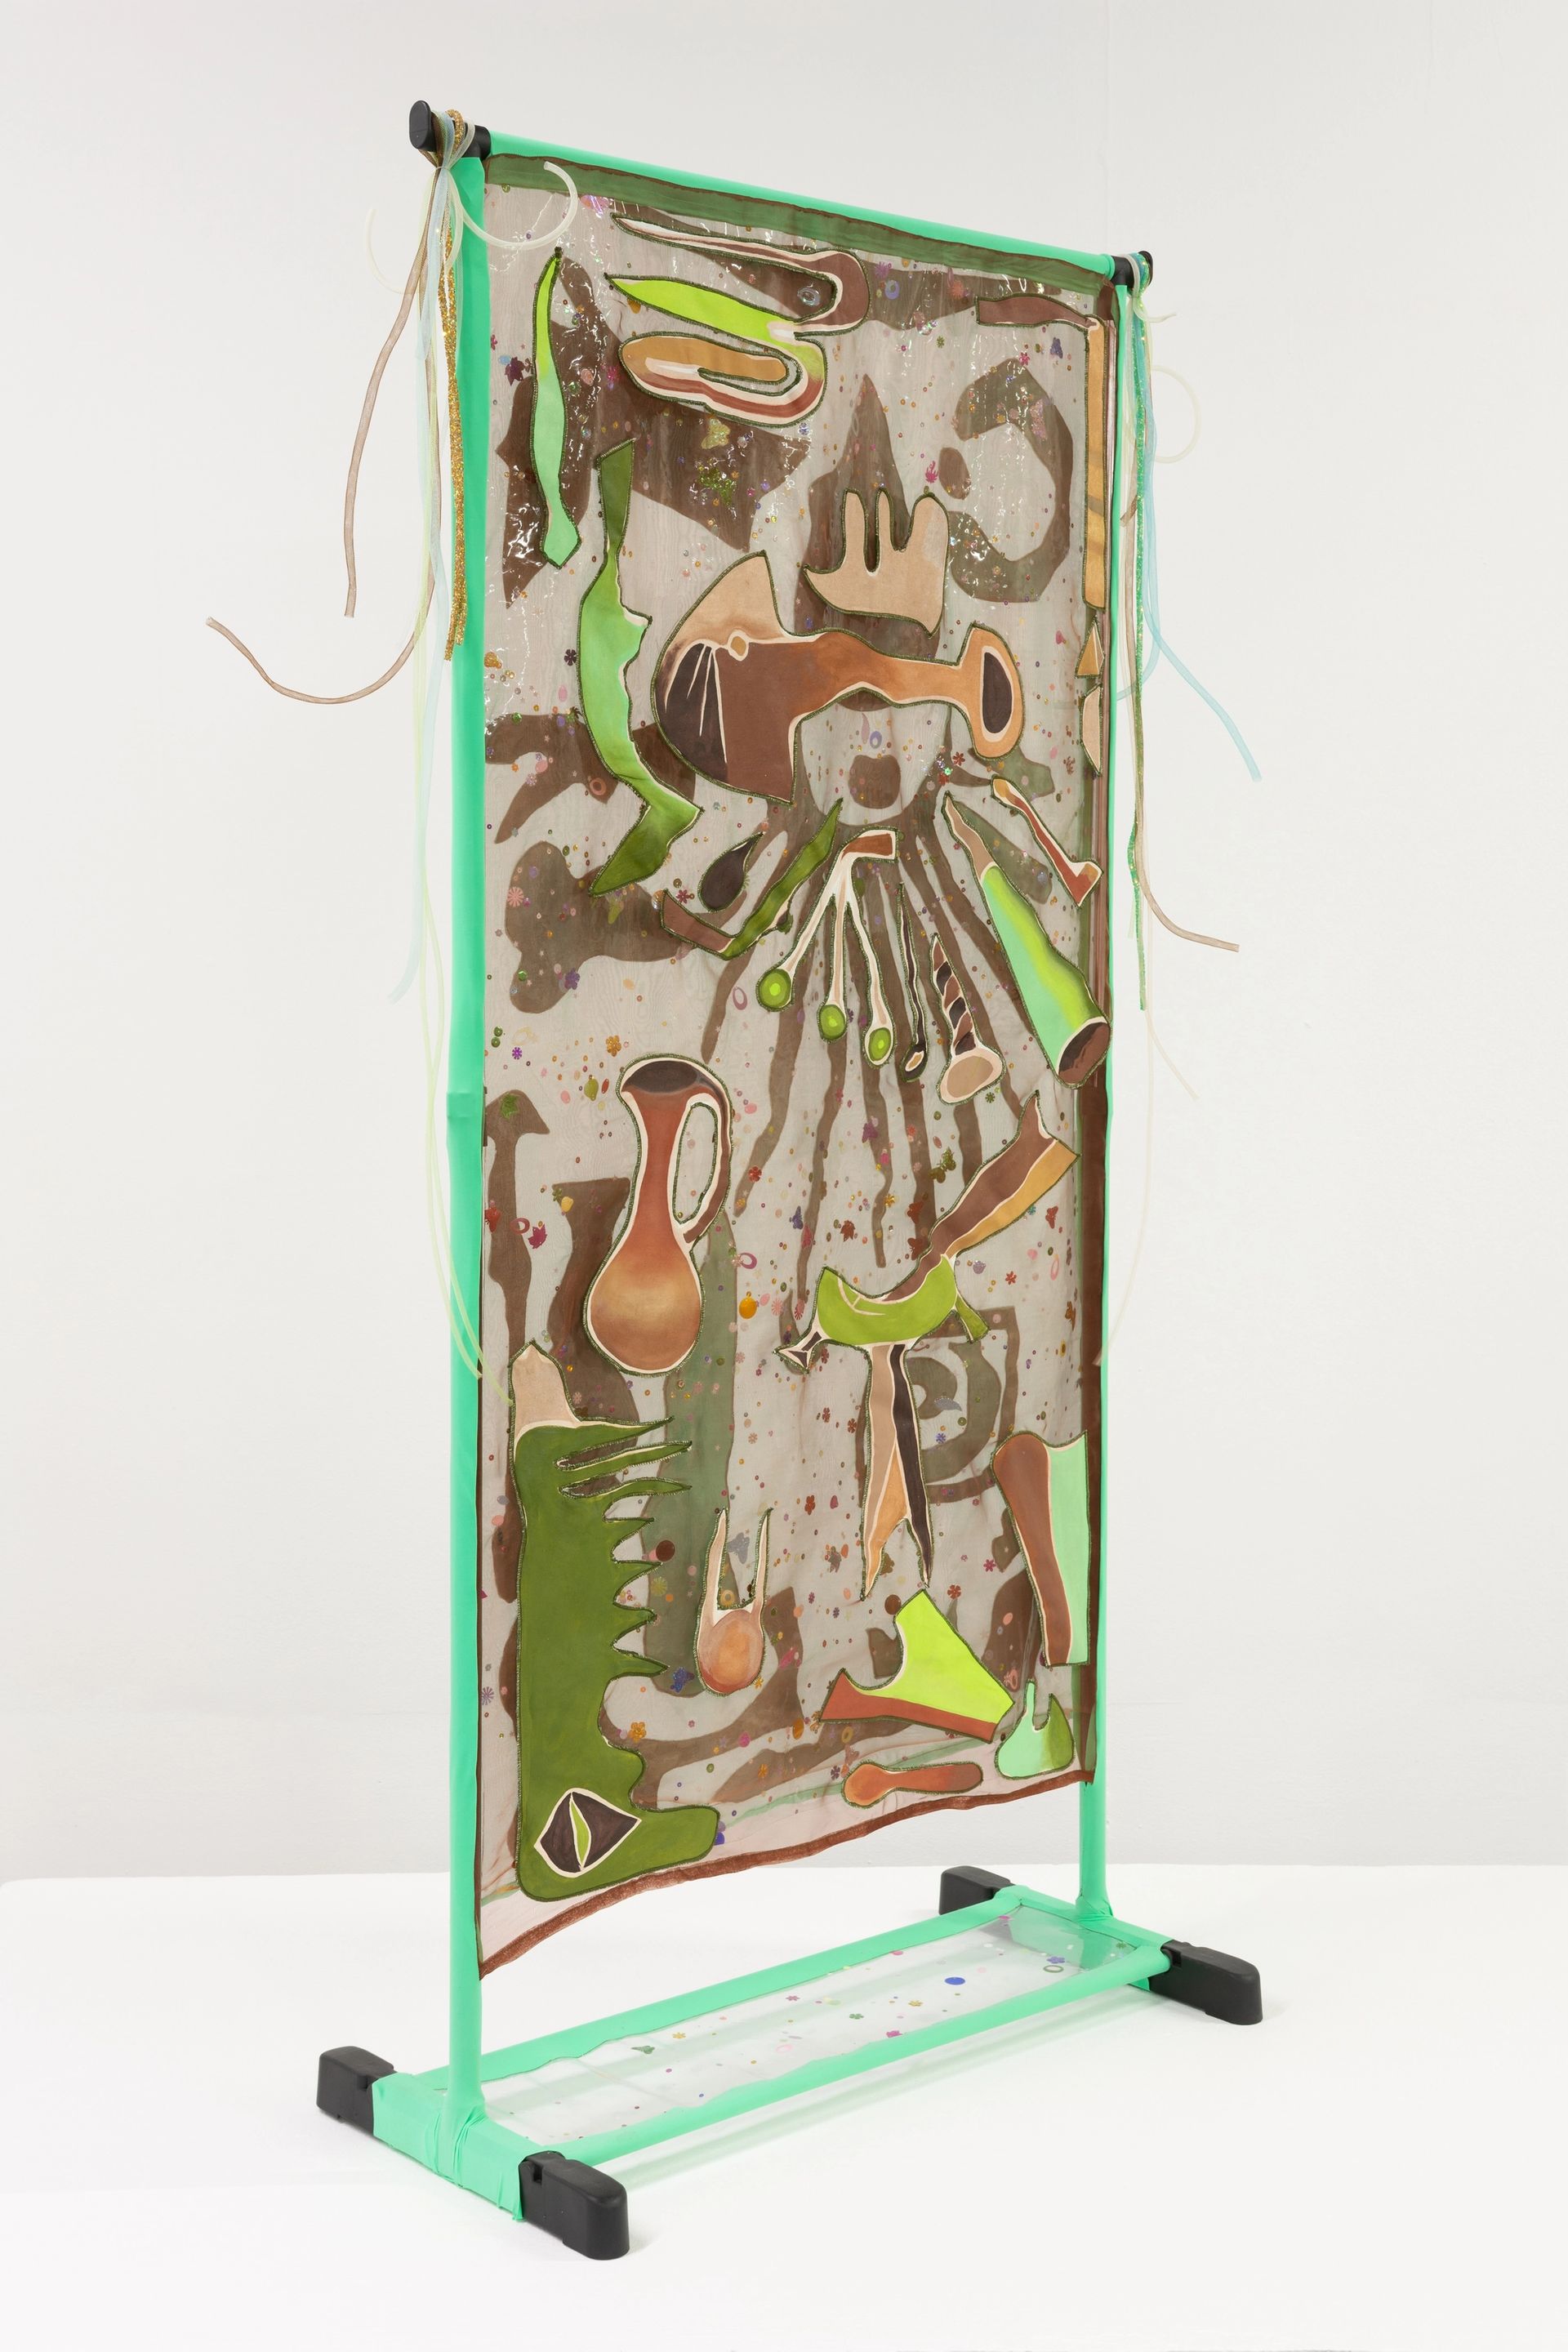 Ana Navas, Fishbowl, 2019, clothing rack, fabric, acrylic, 160 × 80 × 4 cm, photo: Diego Torres